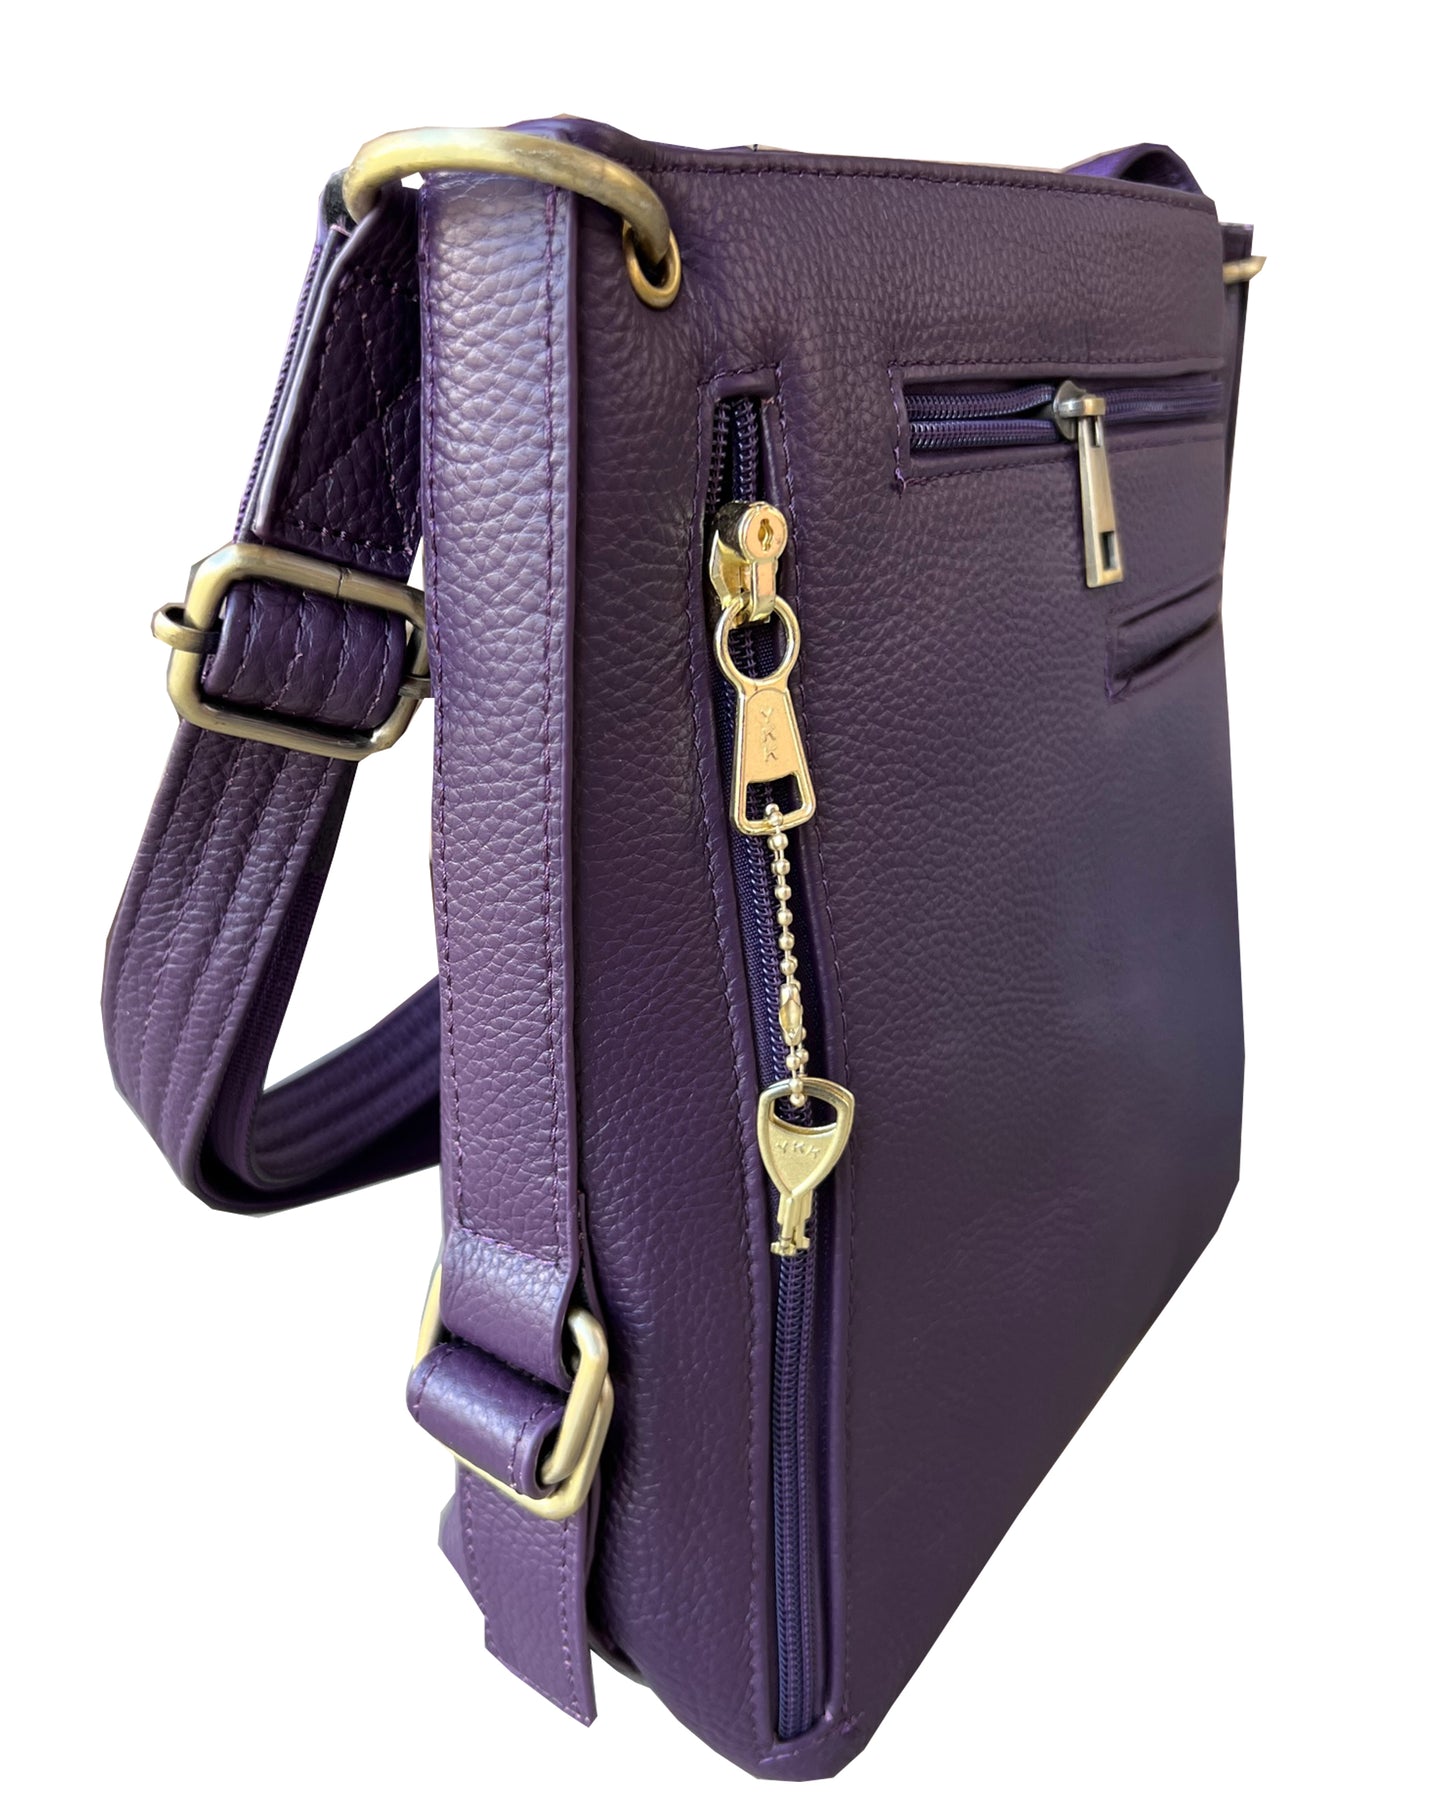 Stylish Leather Concealed Carry Satchel with Adjustable Shoulder Strap & Locking Zippers - Hiding Hilda, LLC